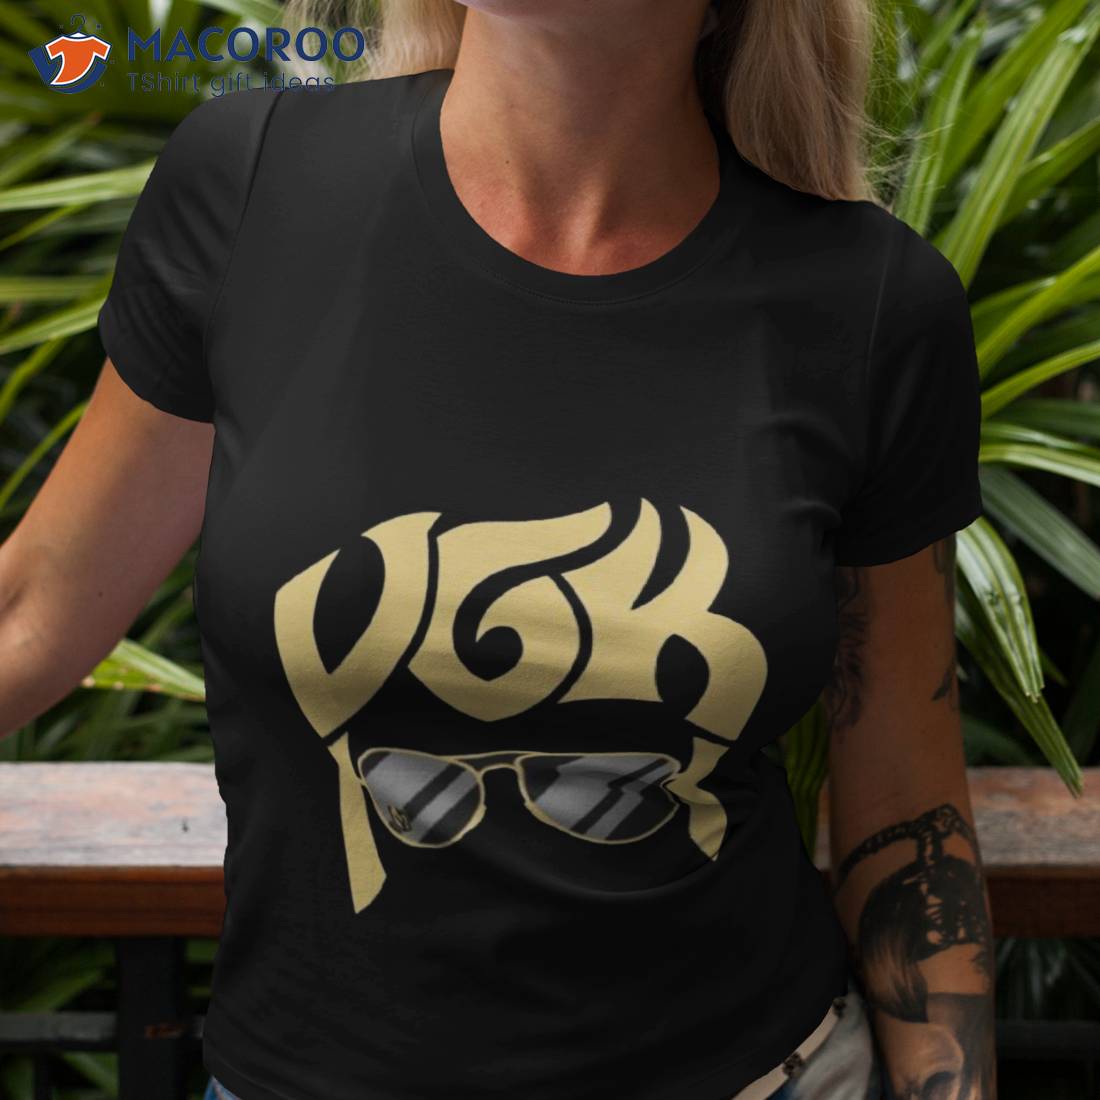 Vgk T-Shirts for Sale